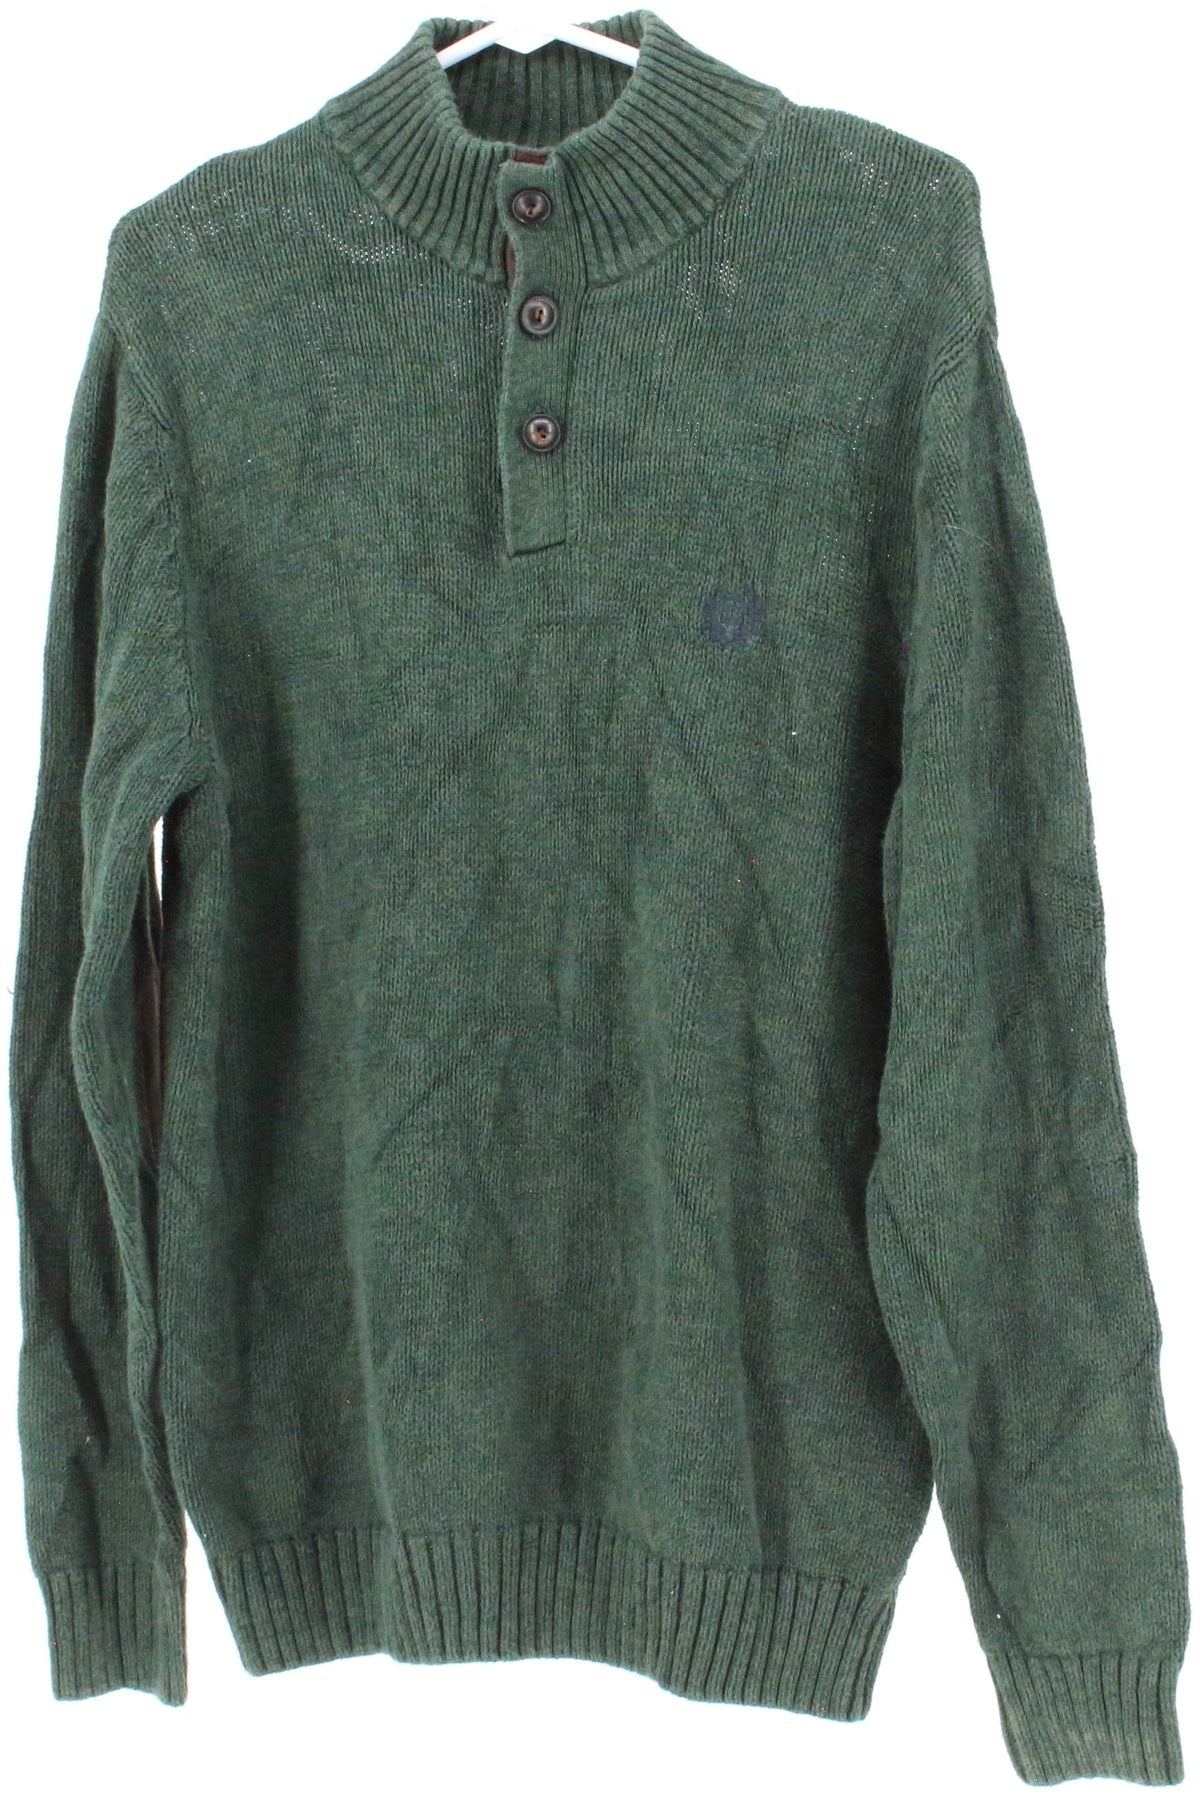 Chaps Dark Green Front Buttons Men's Sweater